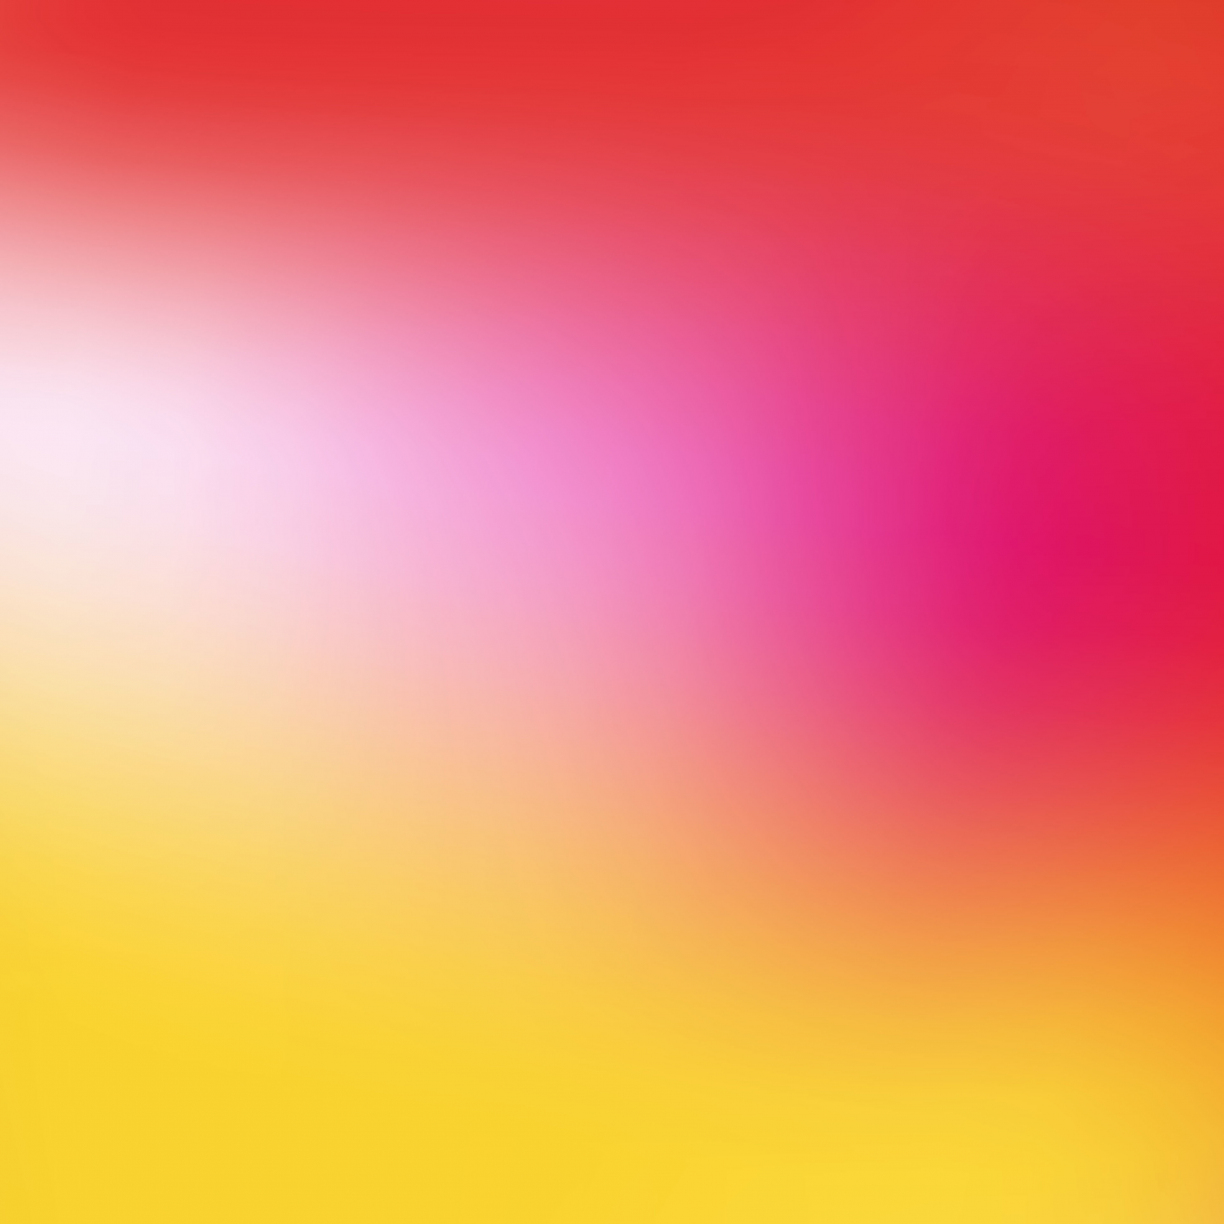 Wallpaper Gradient Yellow And Pink Colors Abstract Desktop Wallpaper